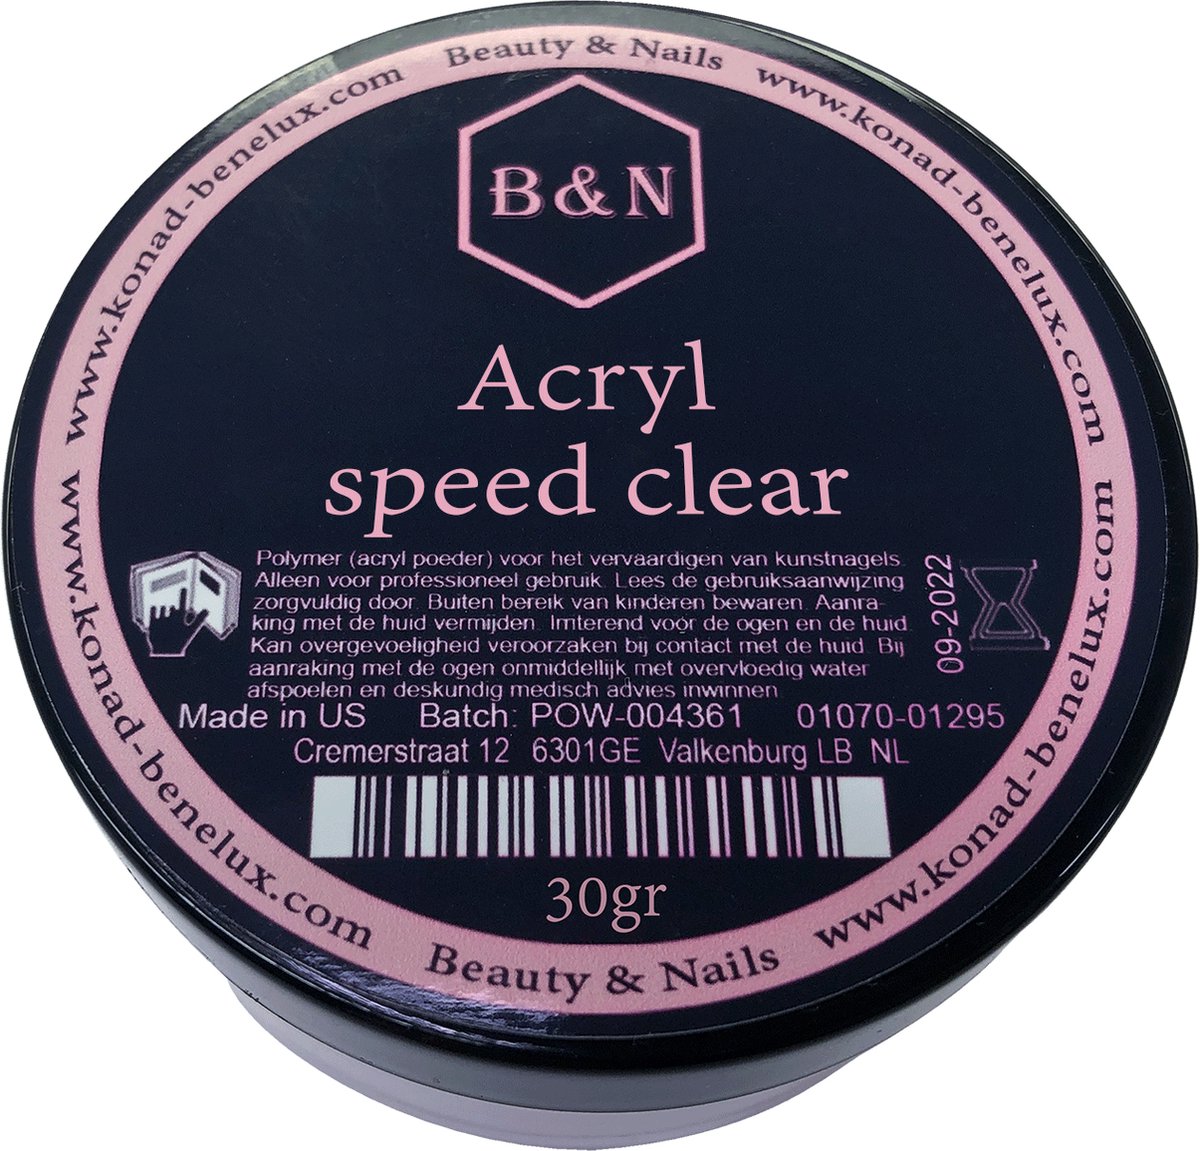 Acryl - speed clear - 30 gr | B&N - acrylpoeder - VEGAN - acrylpoeder